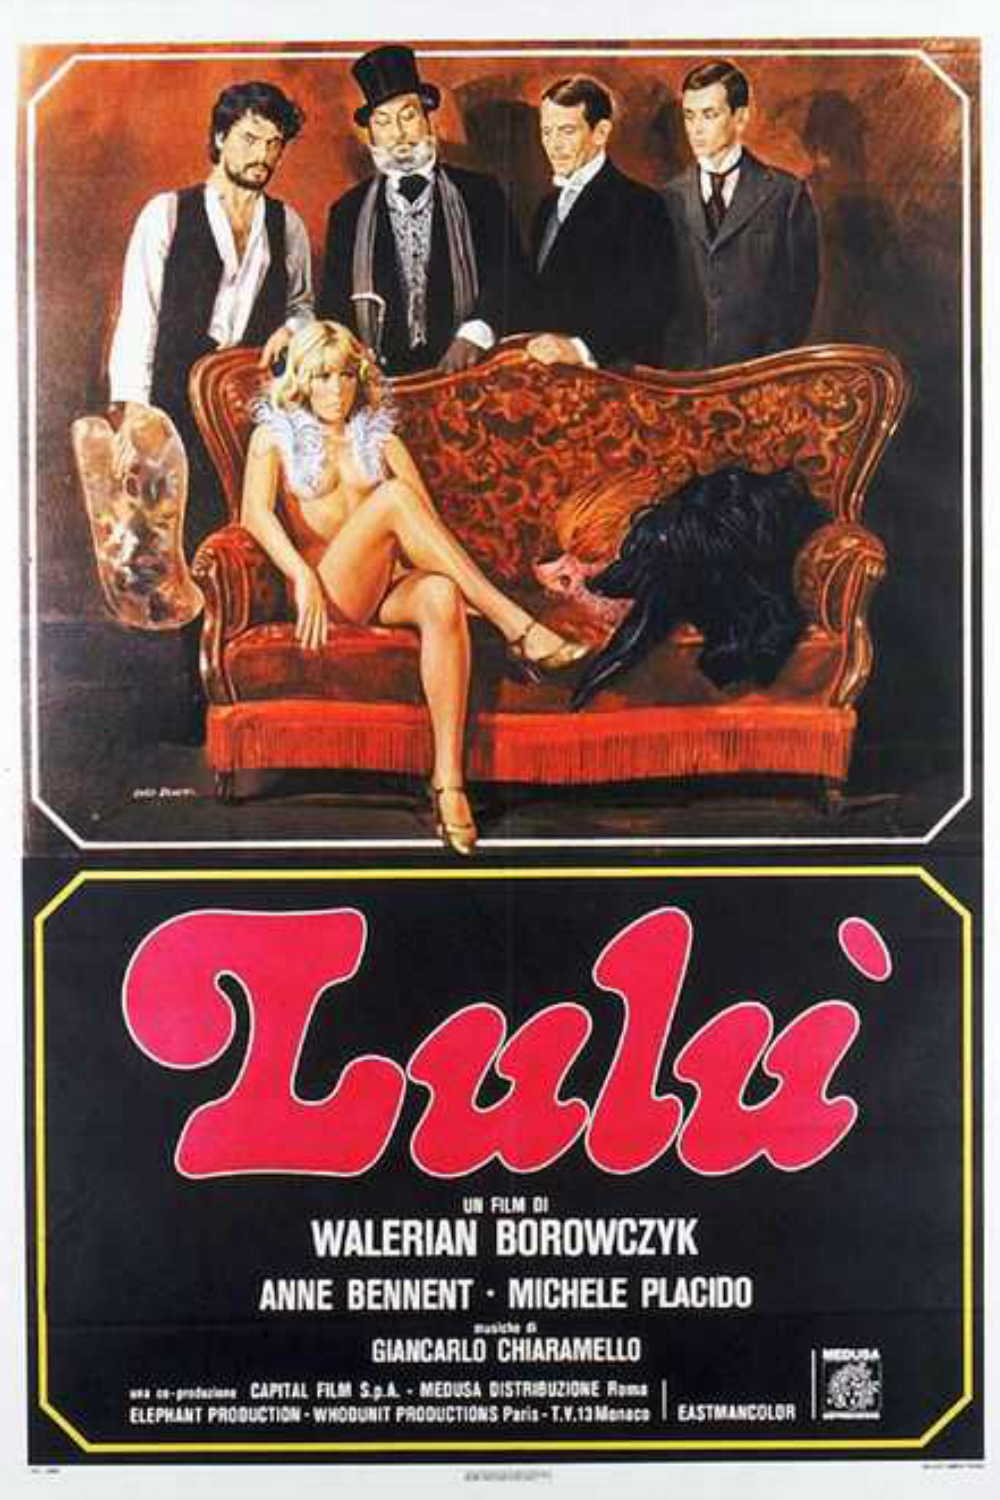 affiche du film Lulu